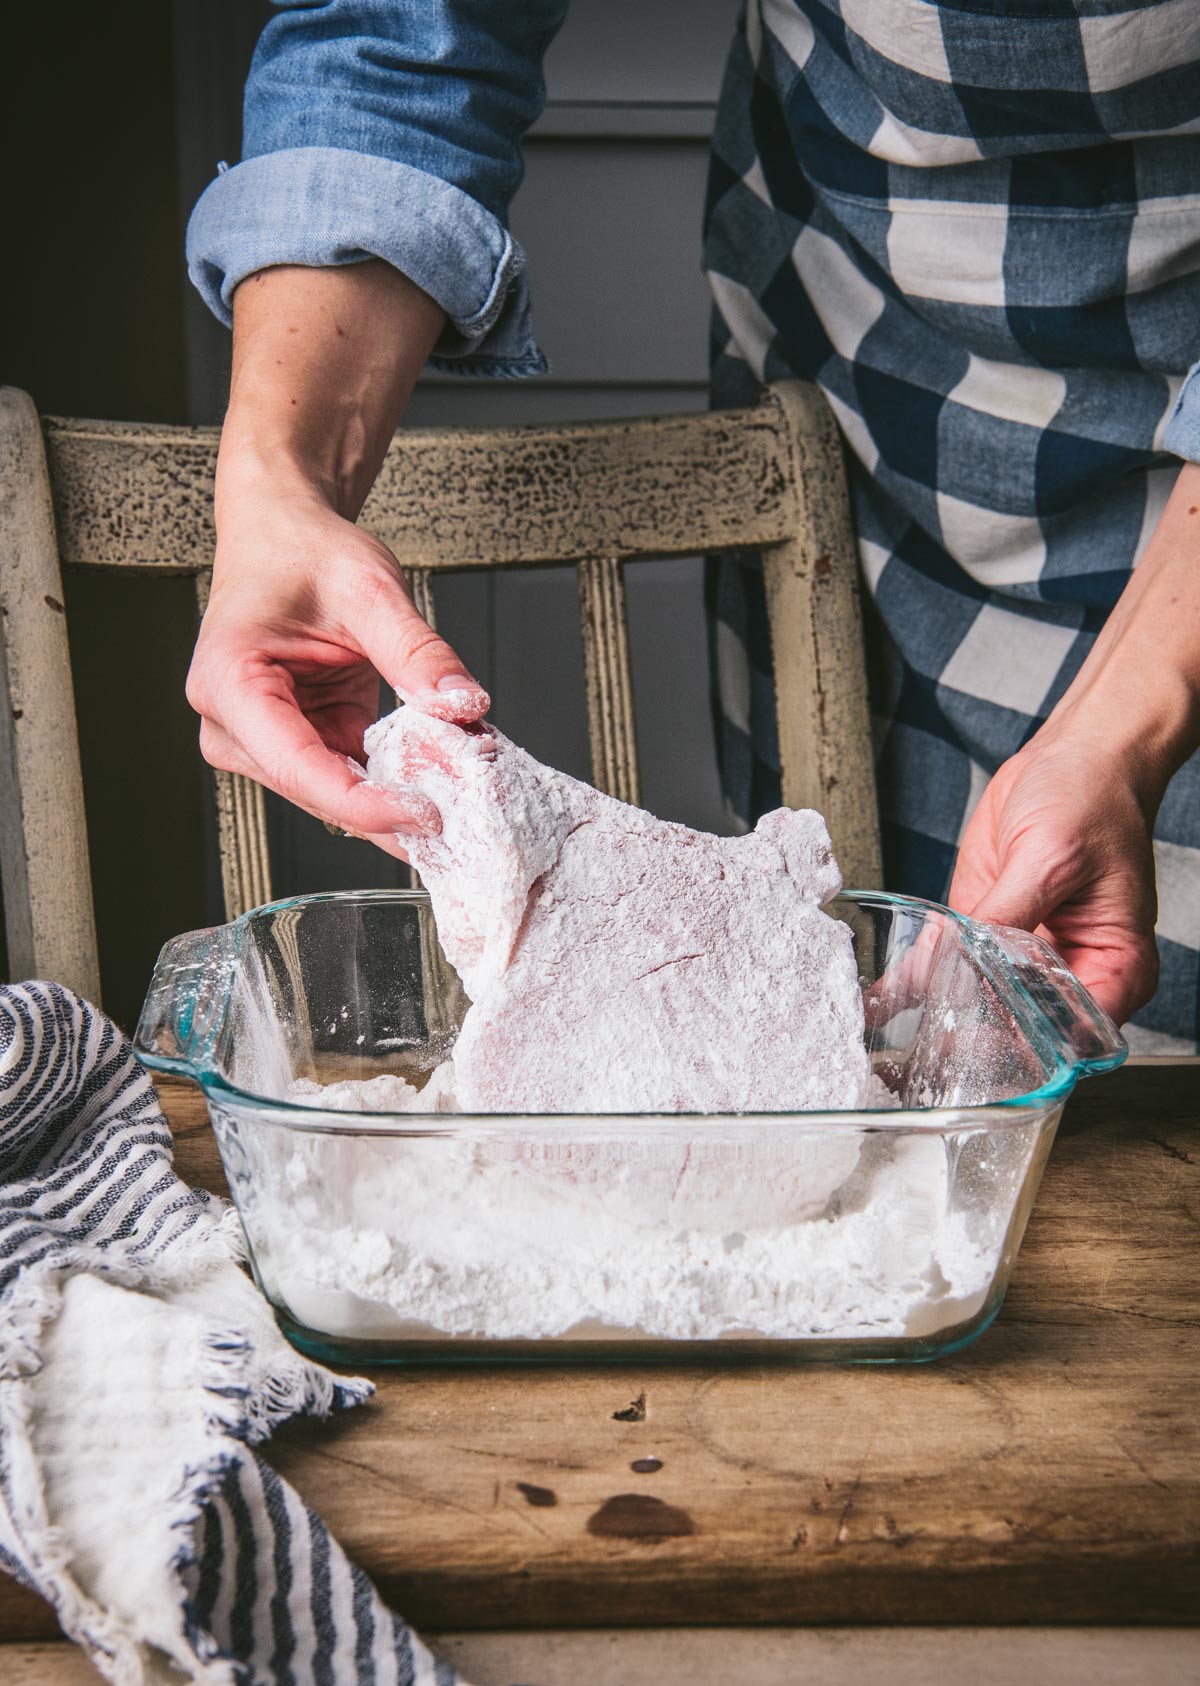 Dredging pork chop in seasoned flour